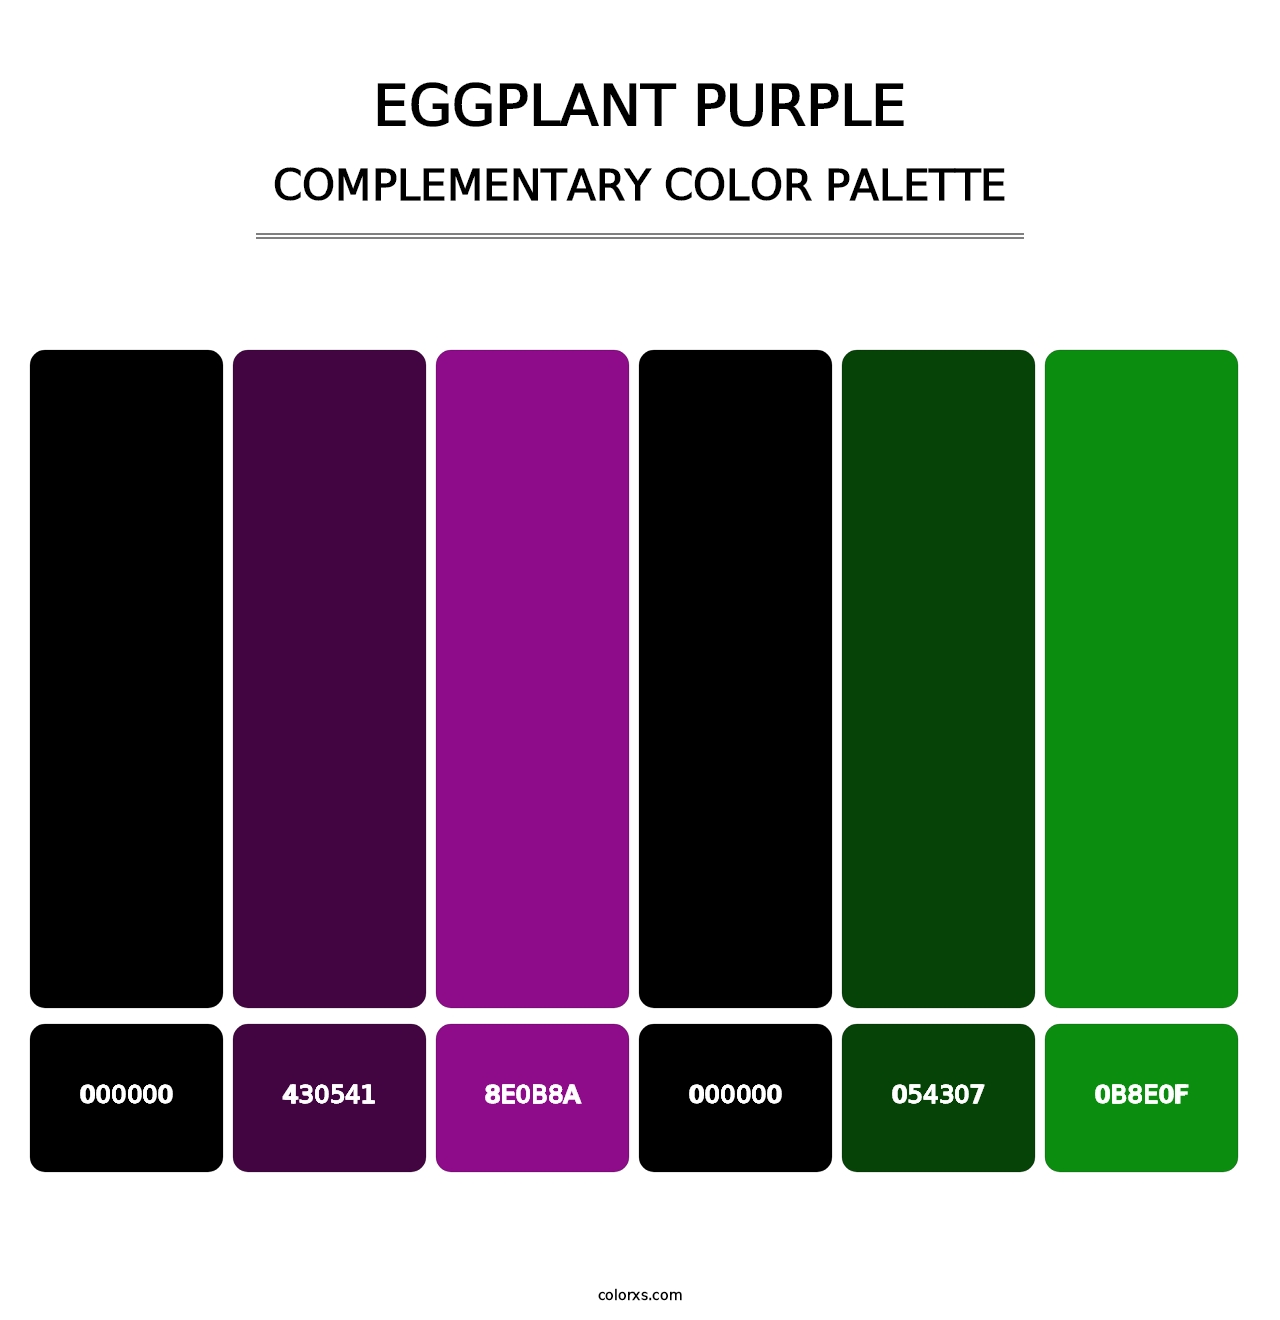 Eggplant Purple - Complementary Color Palette